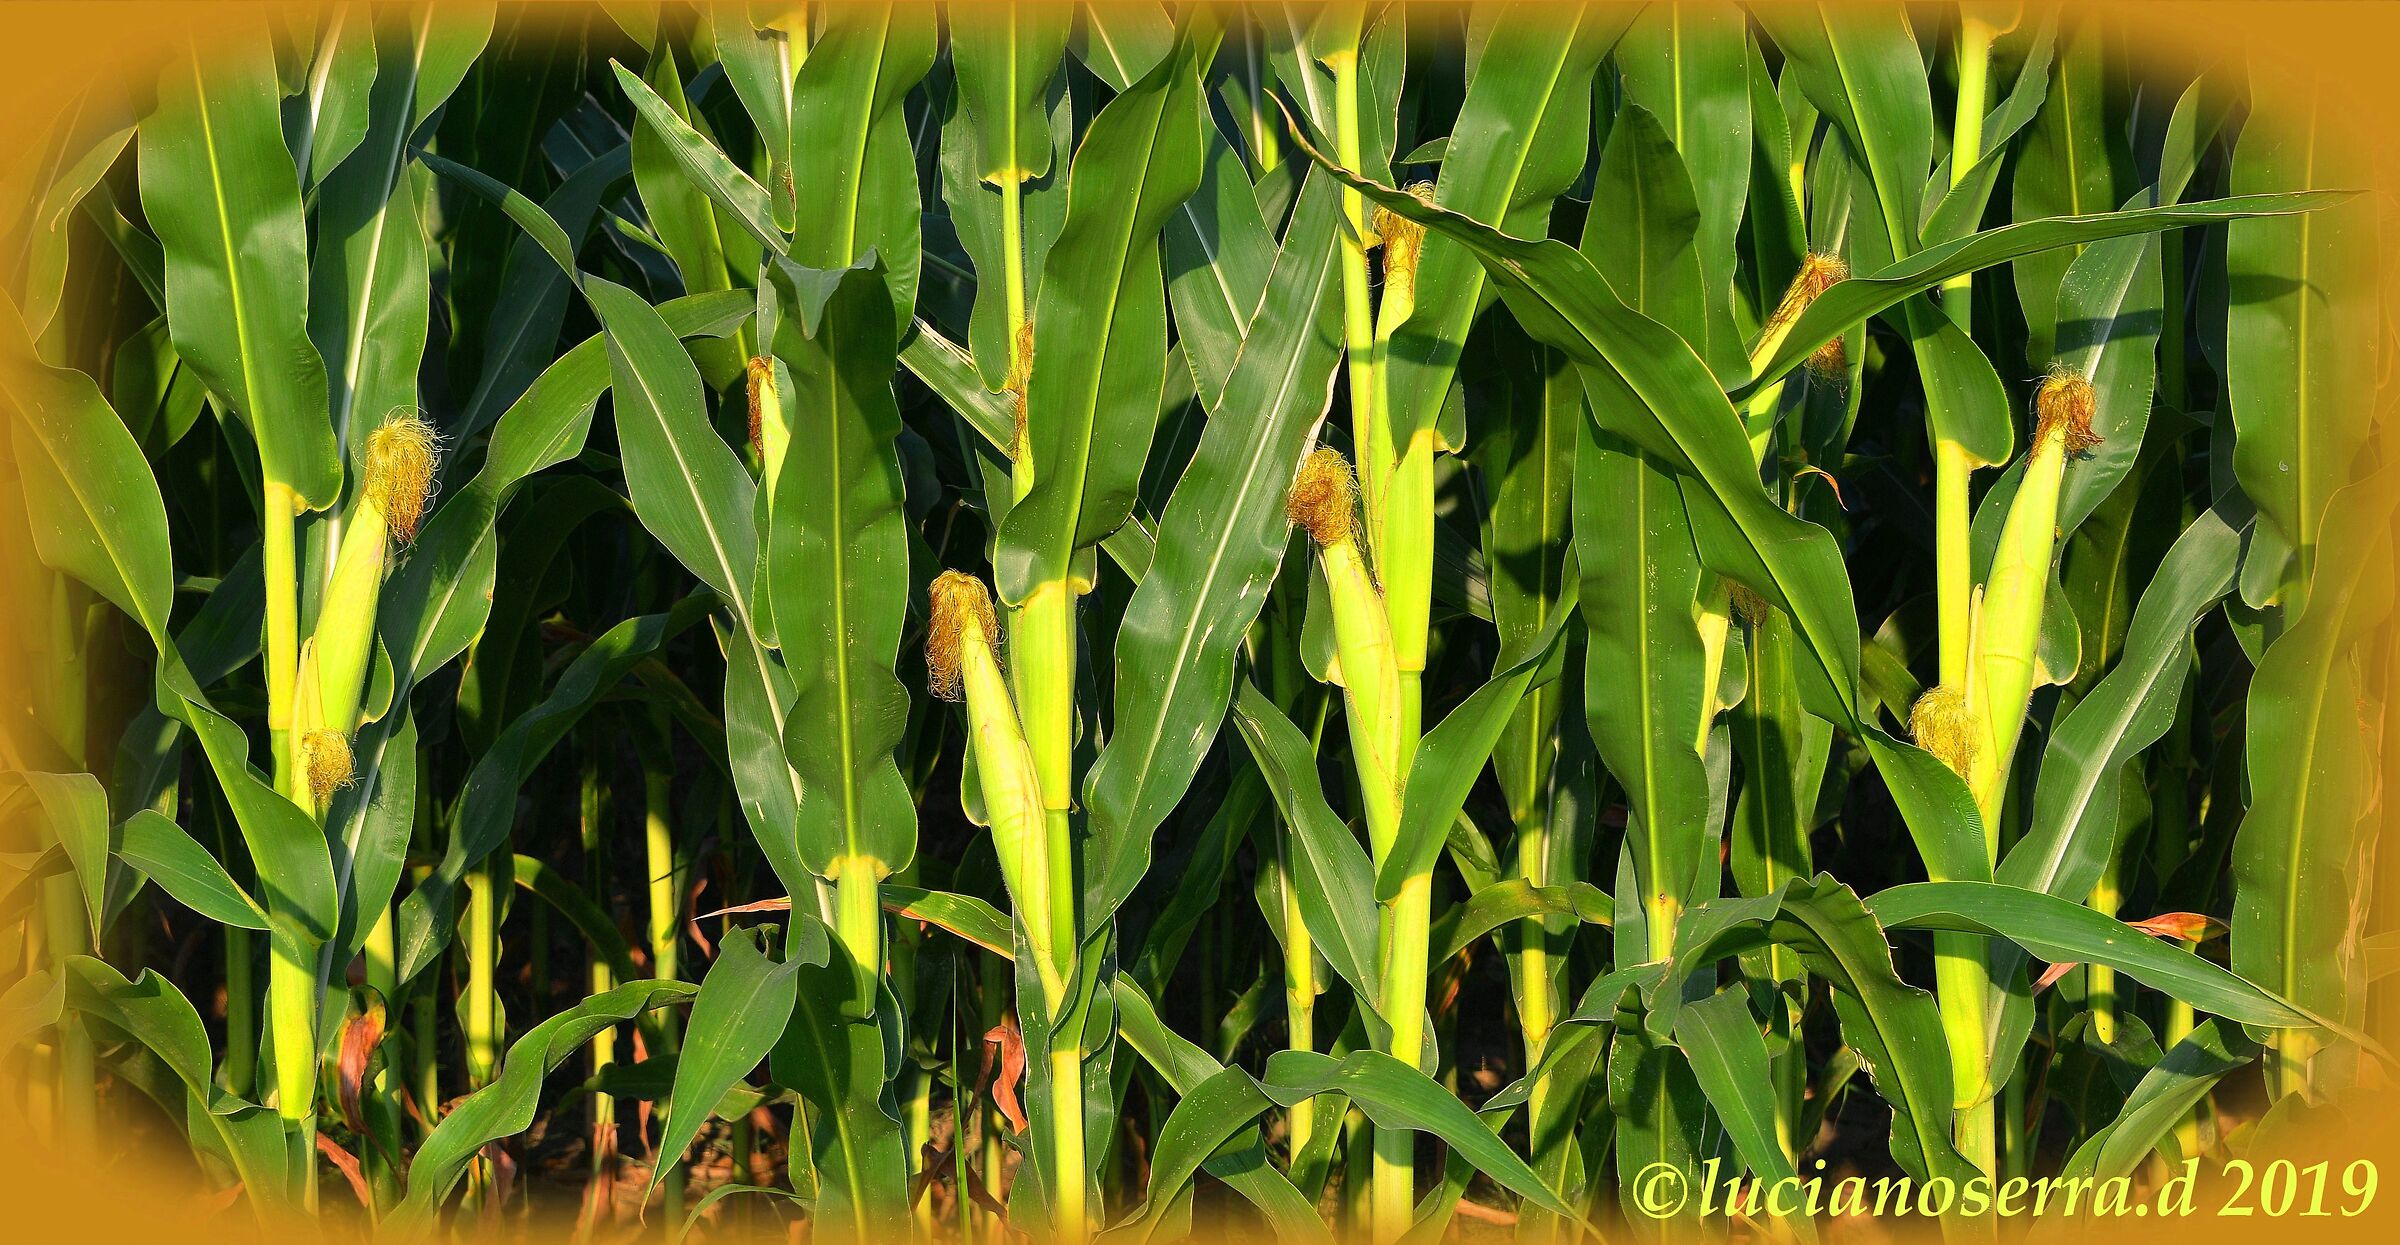 Maize ears ripening...